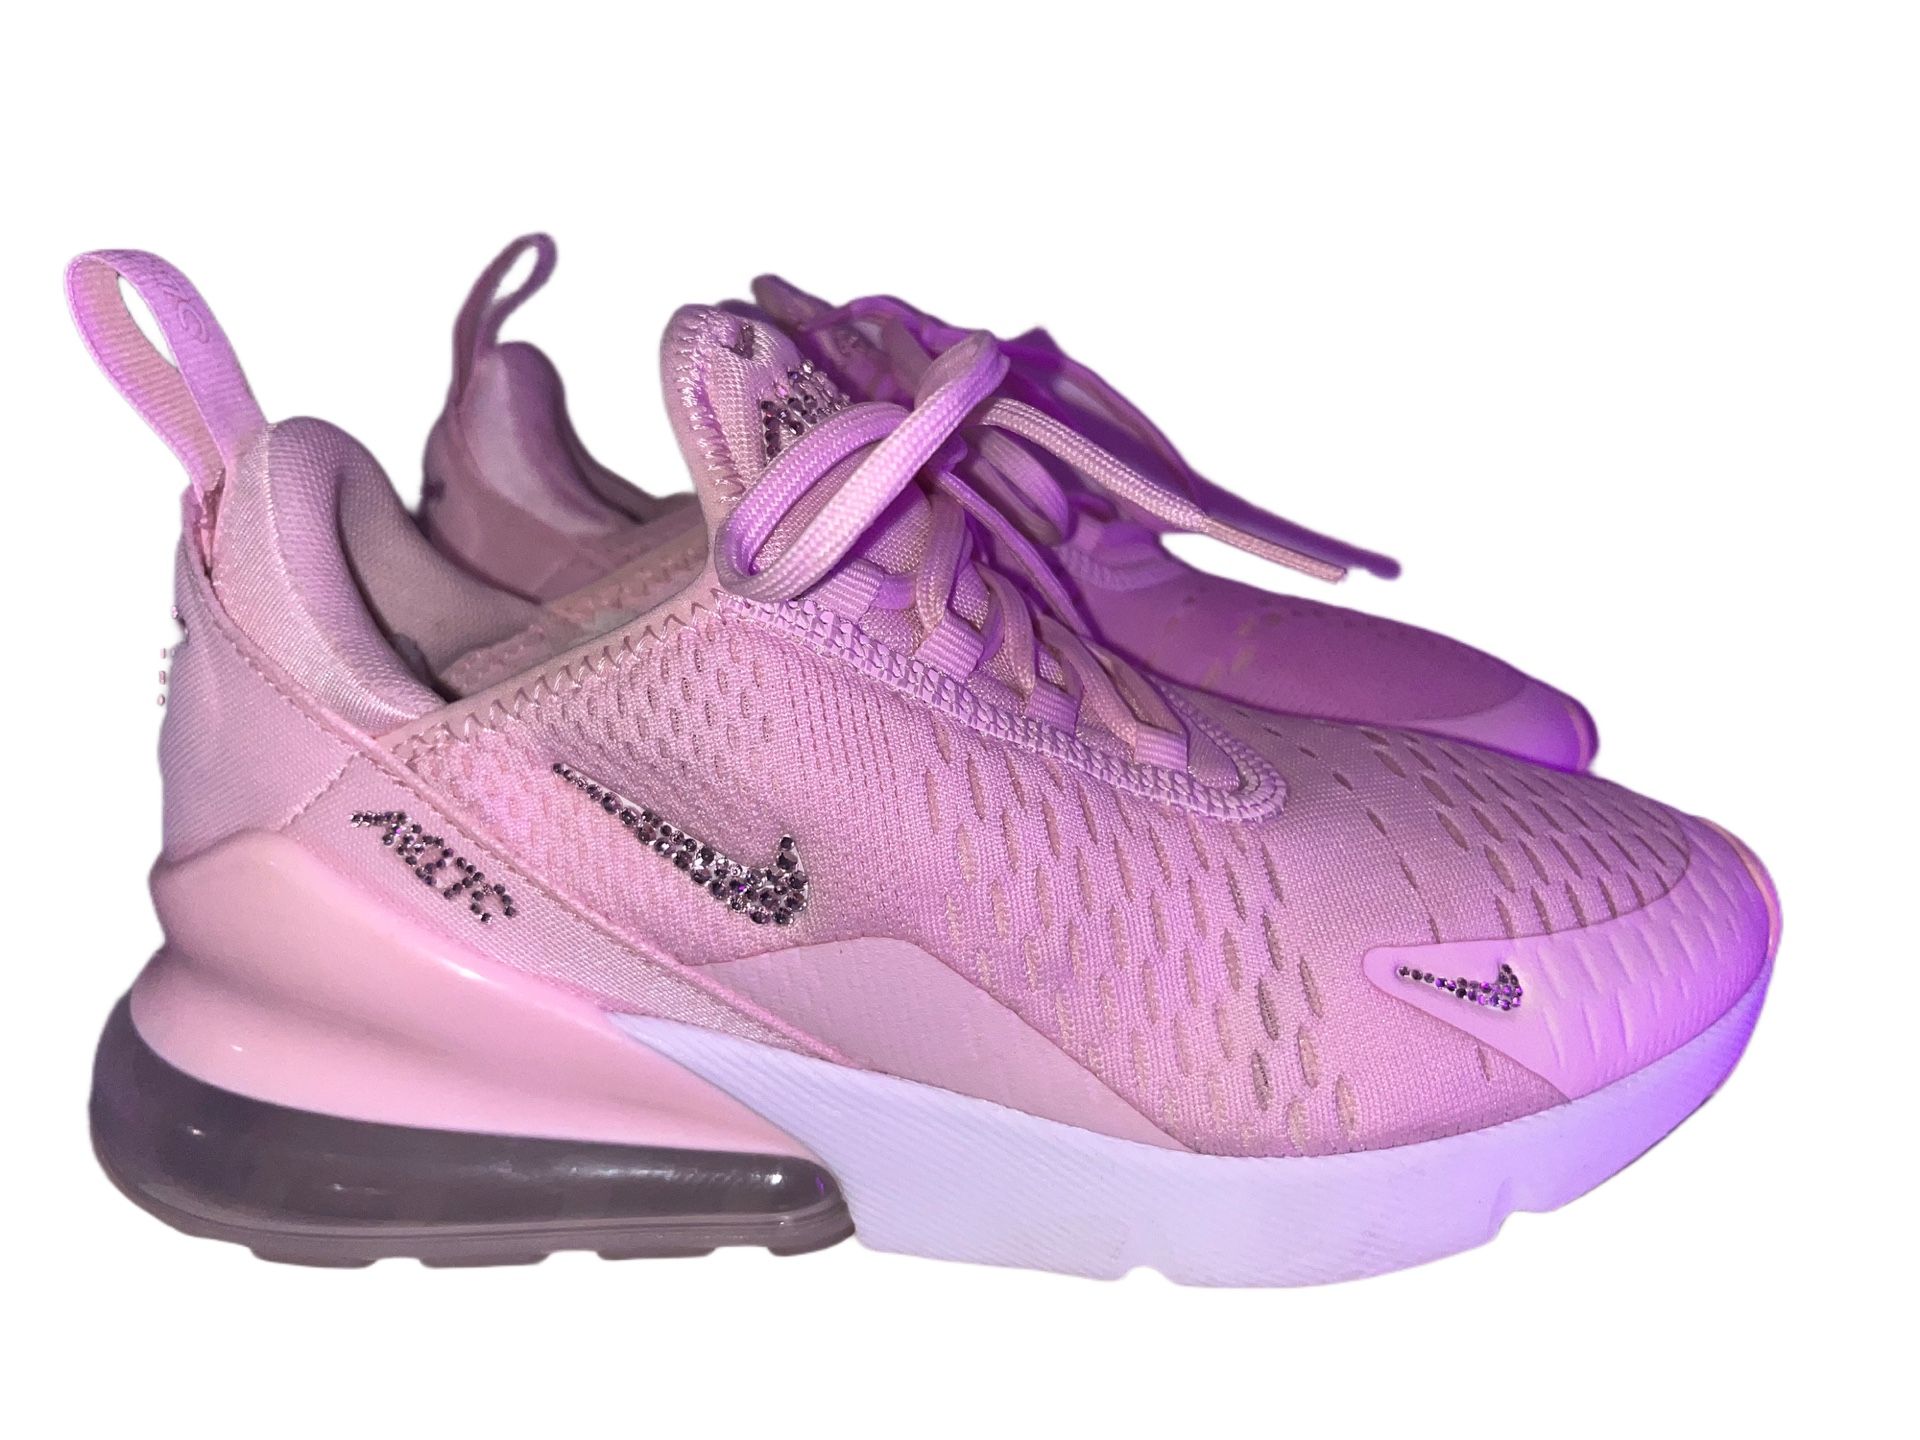 Customized Nike Air Max 270 Prism Pink